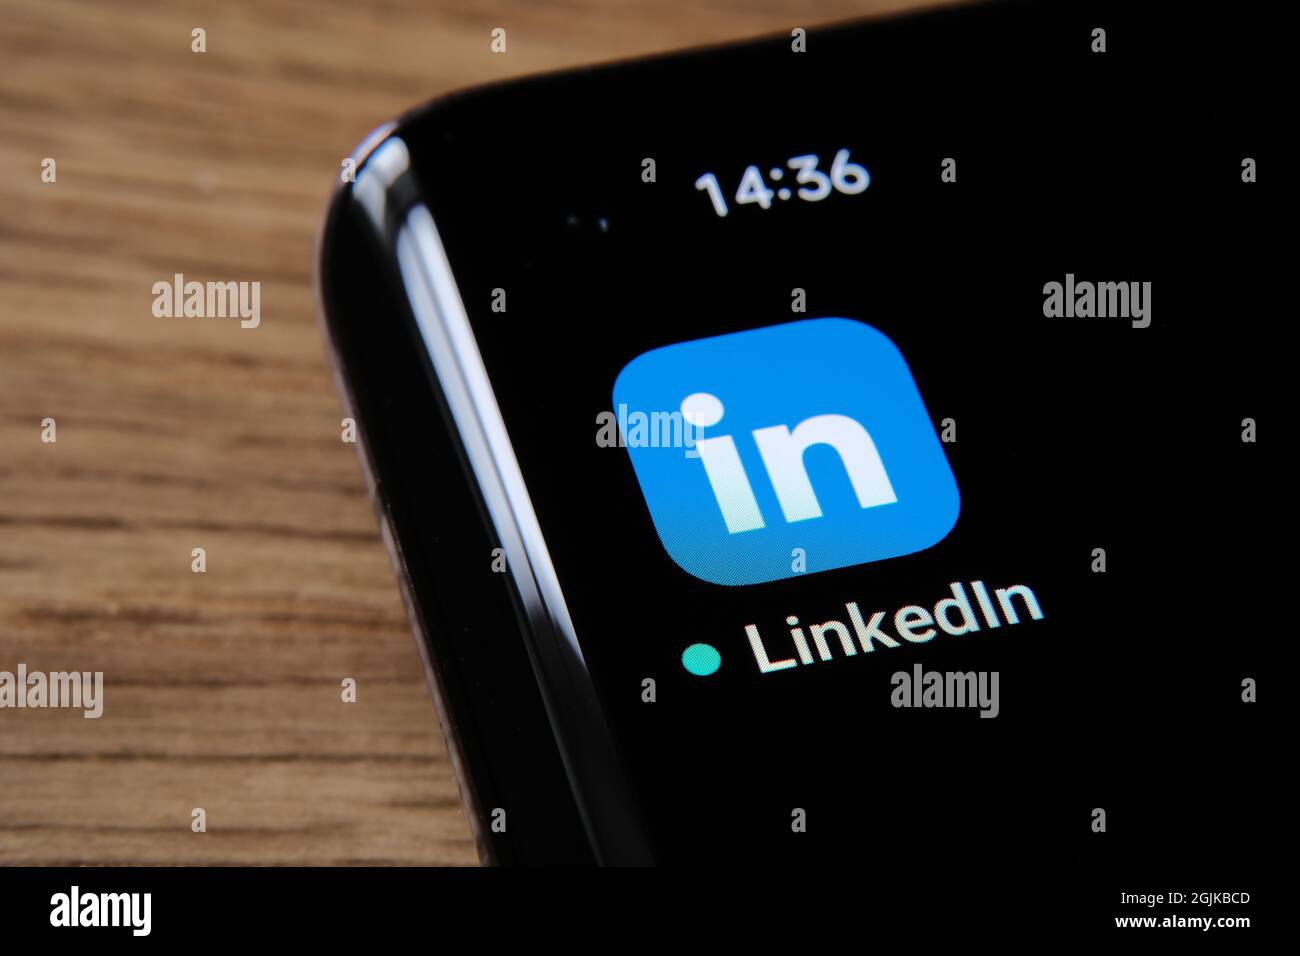 LinkedIn icon seen on smartphone screen Stock Photo